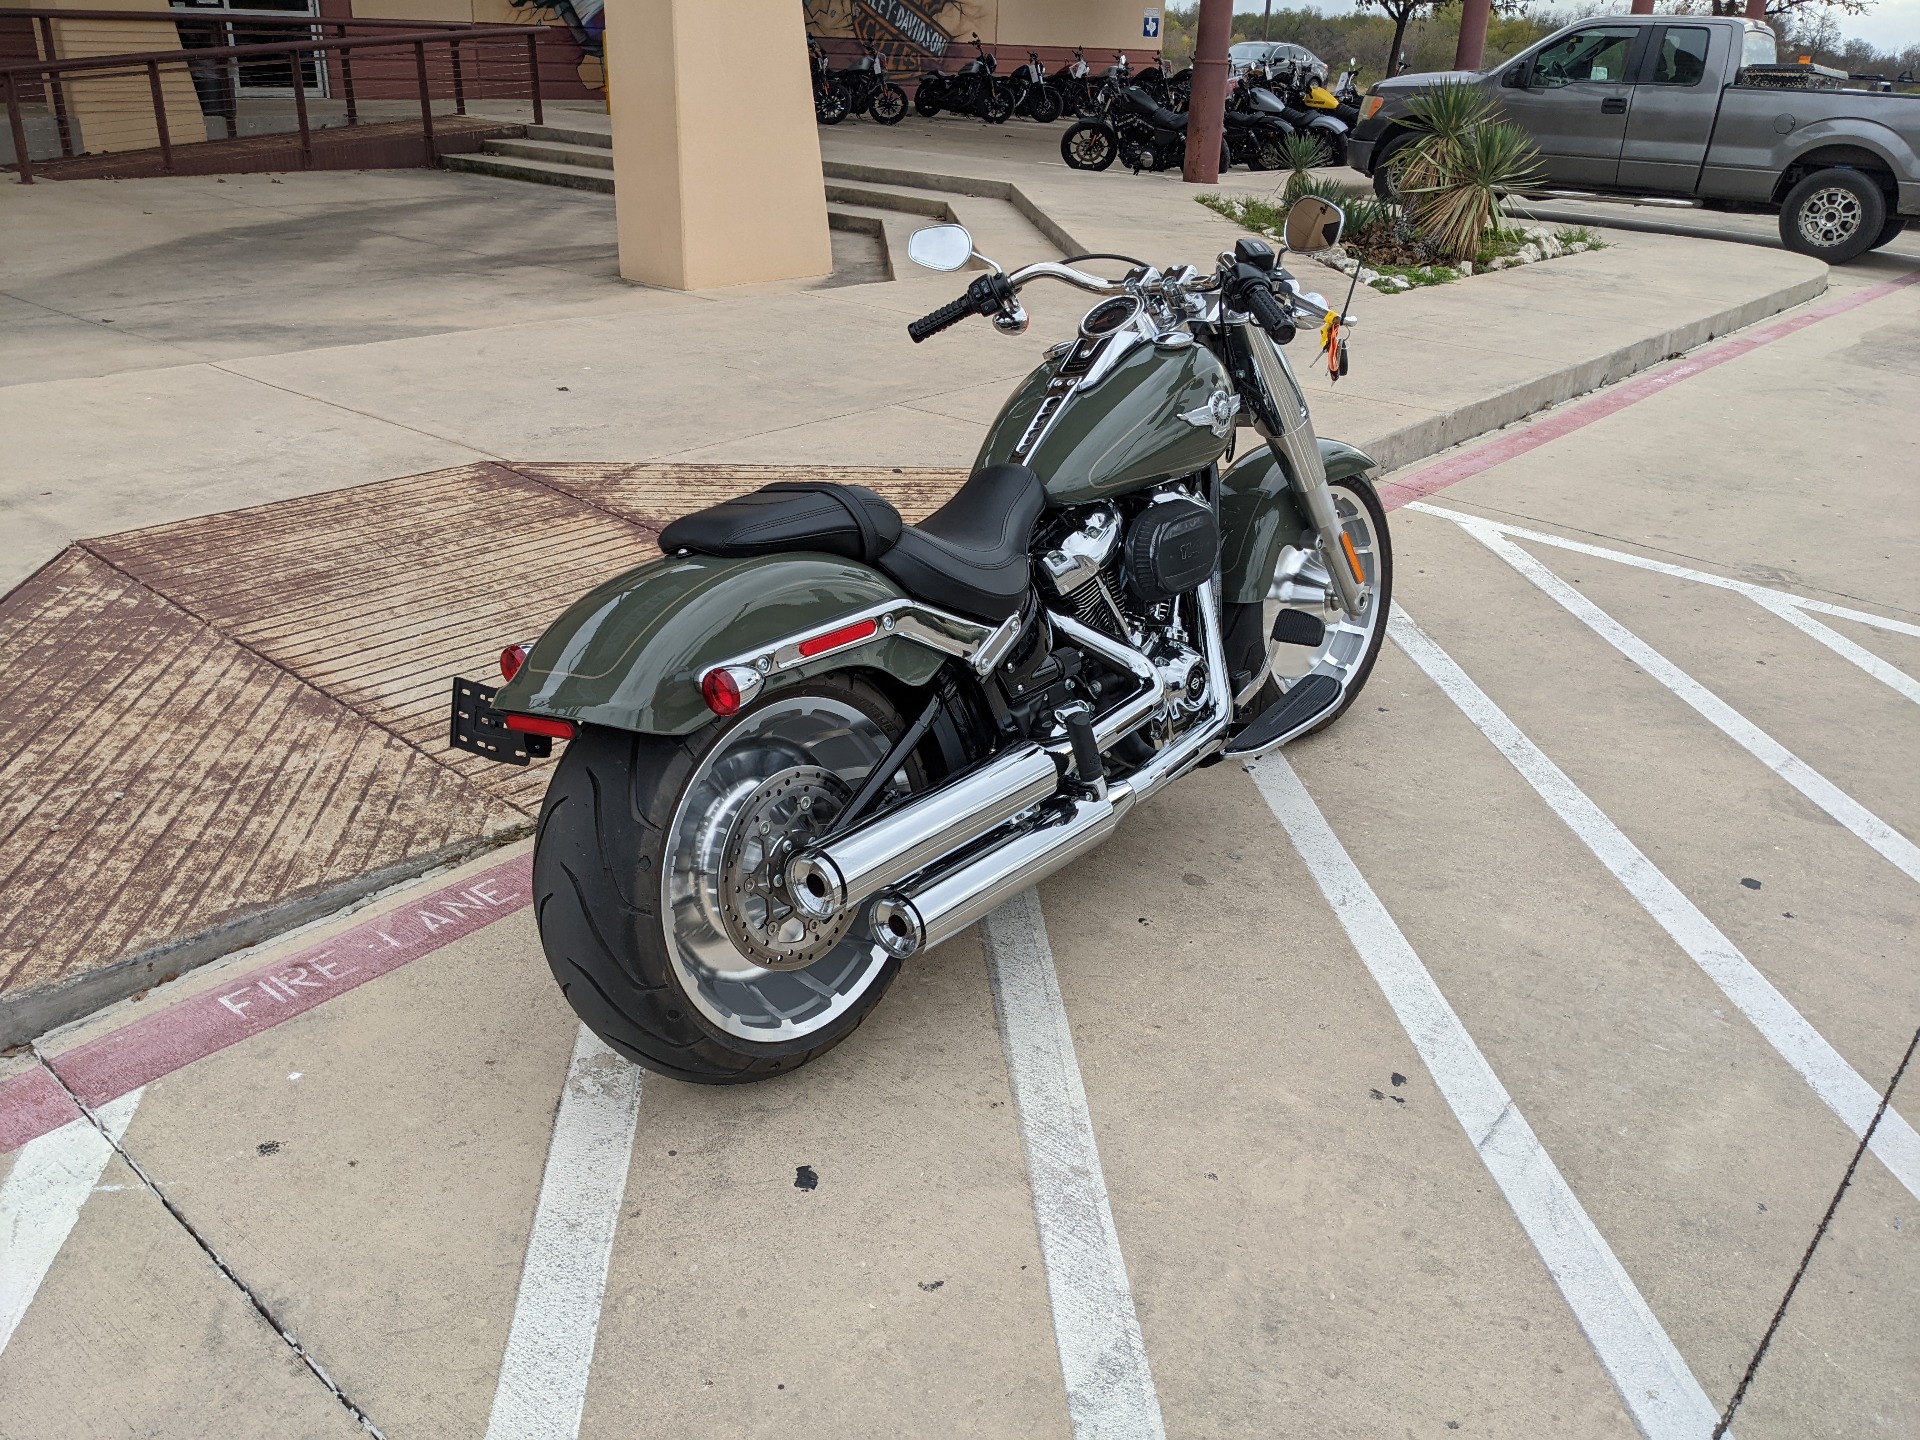 2021 Harley-Davidson Fat Boy® 114 in San Antonio, Texas - Photo 8